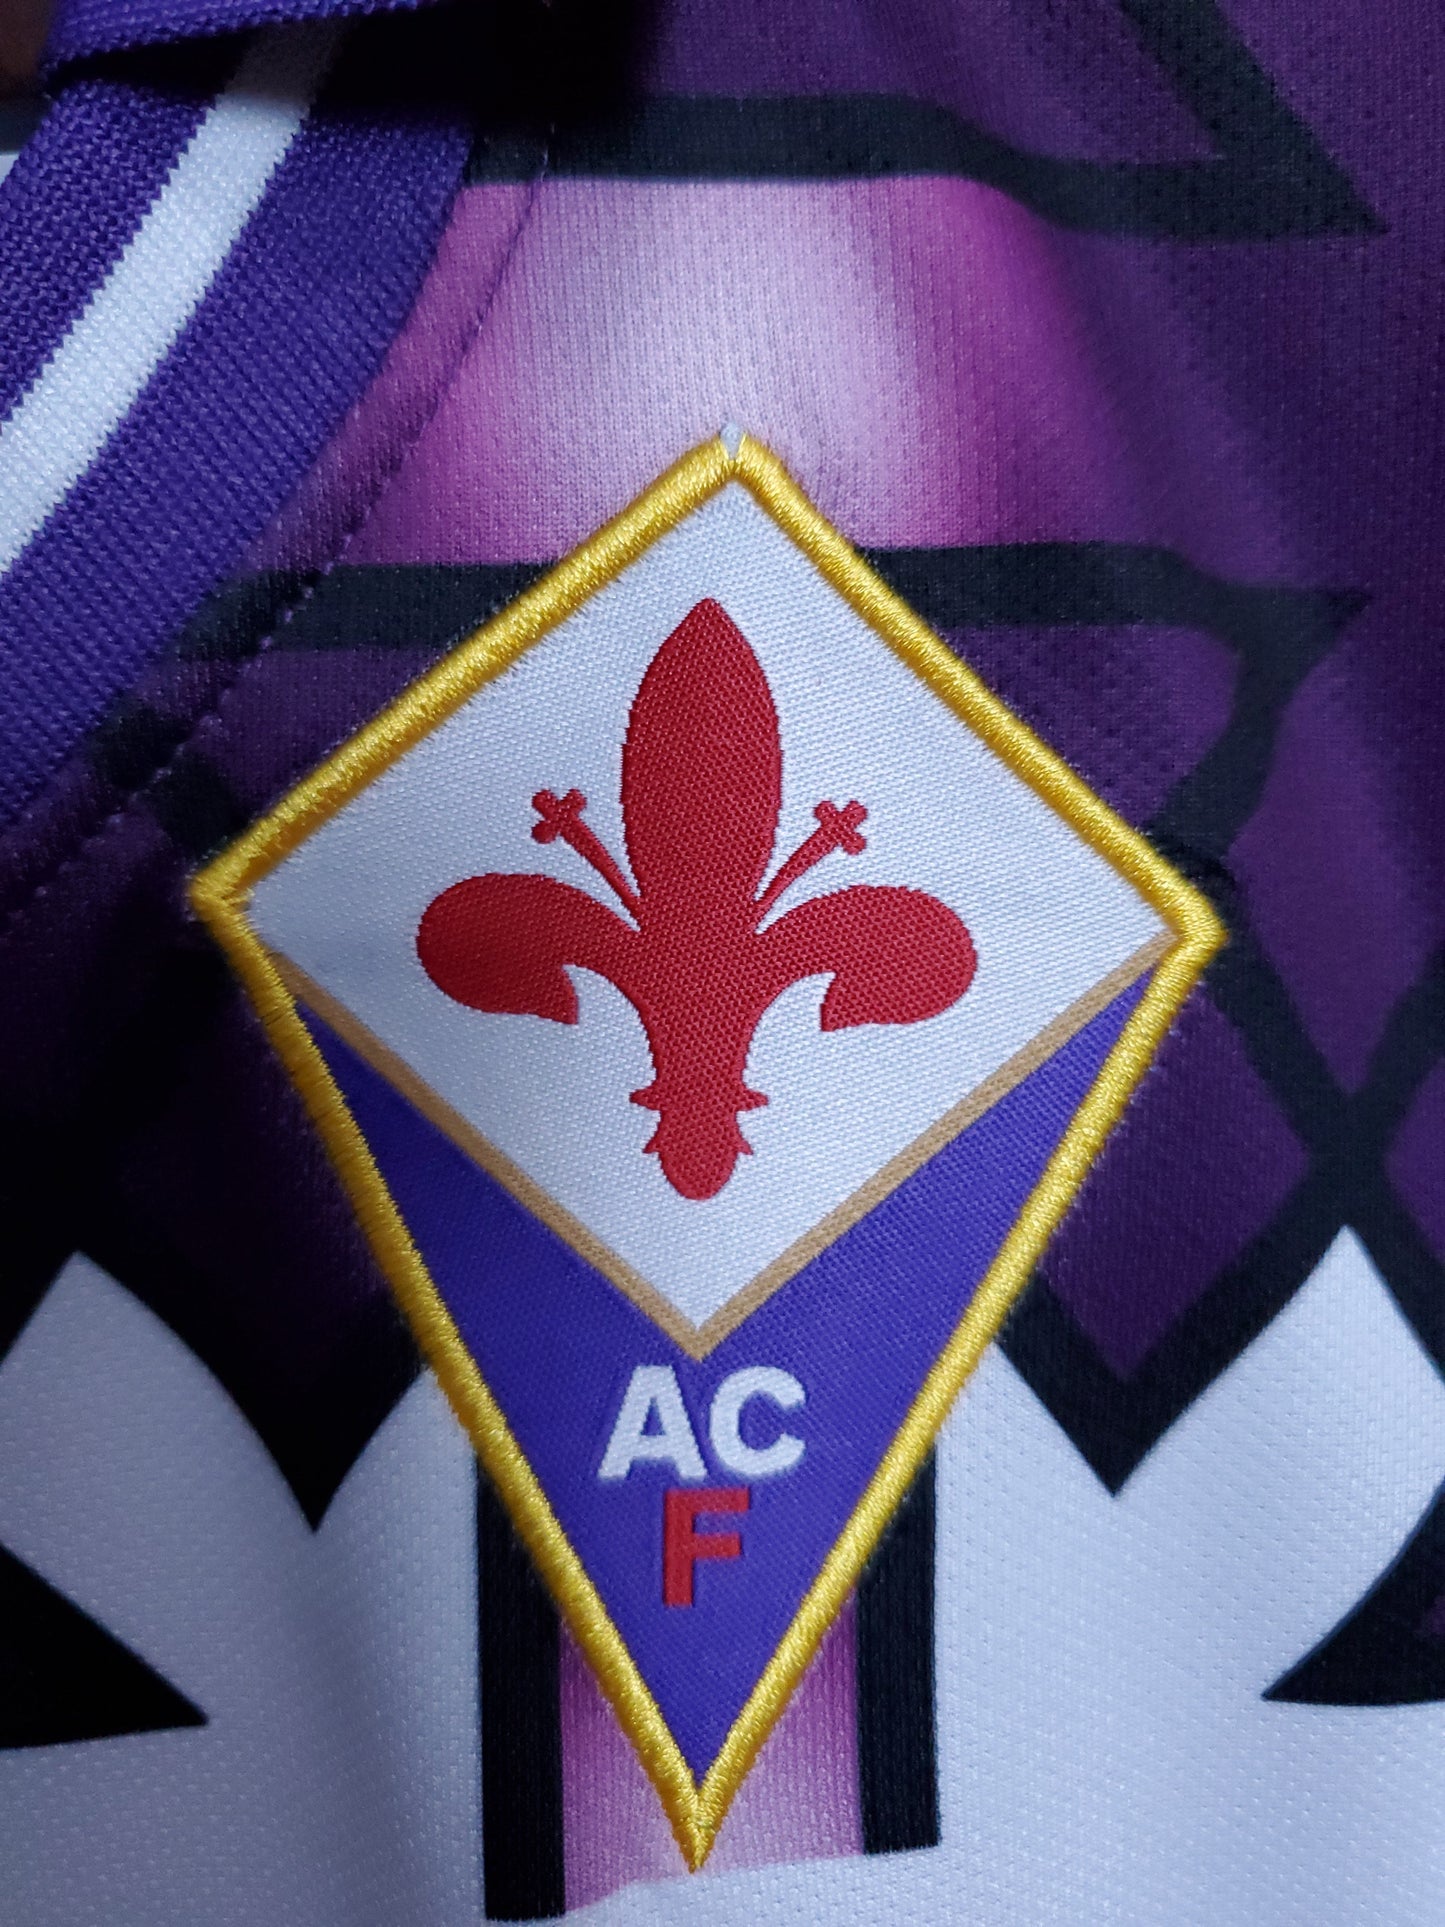 Retro 92/93 Fiorentina Away Kit